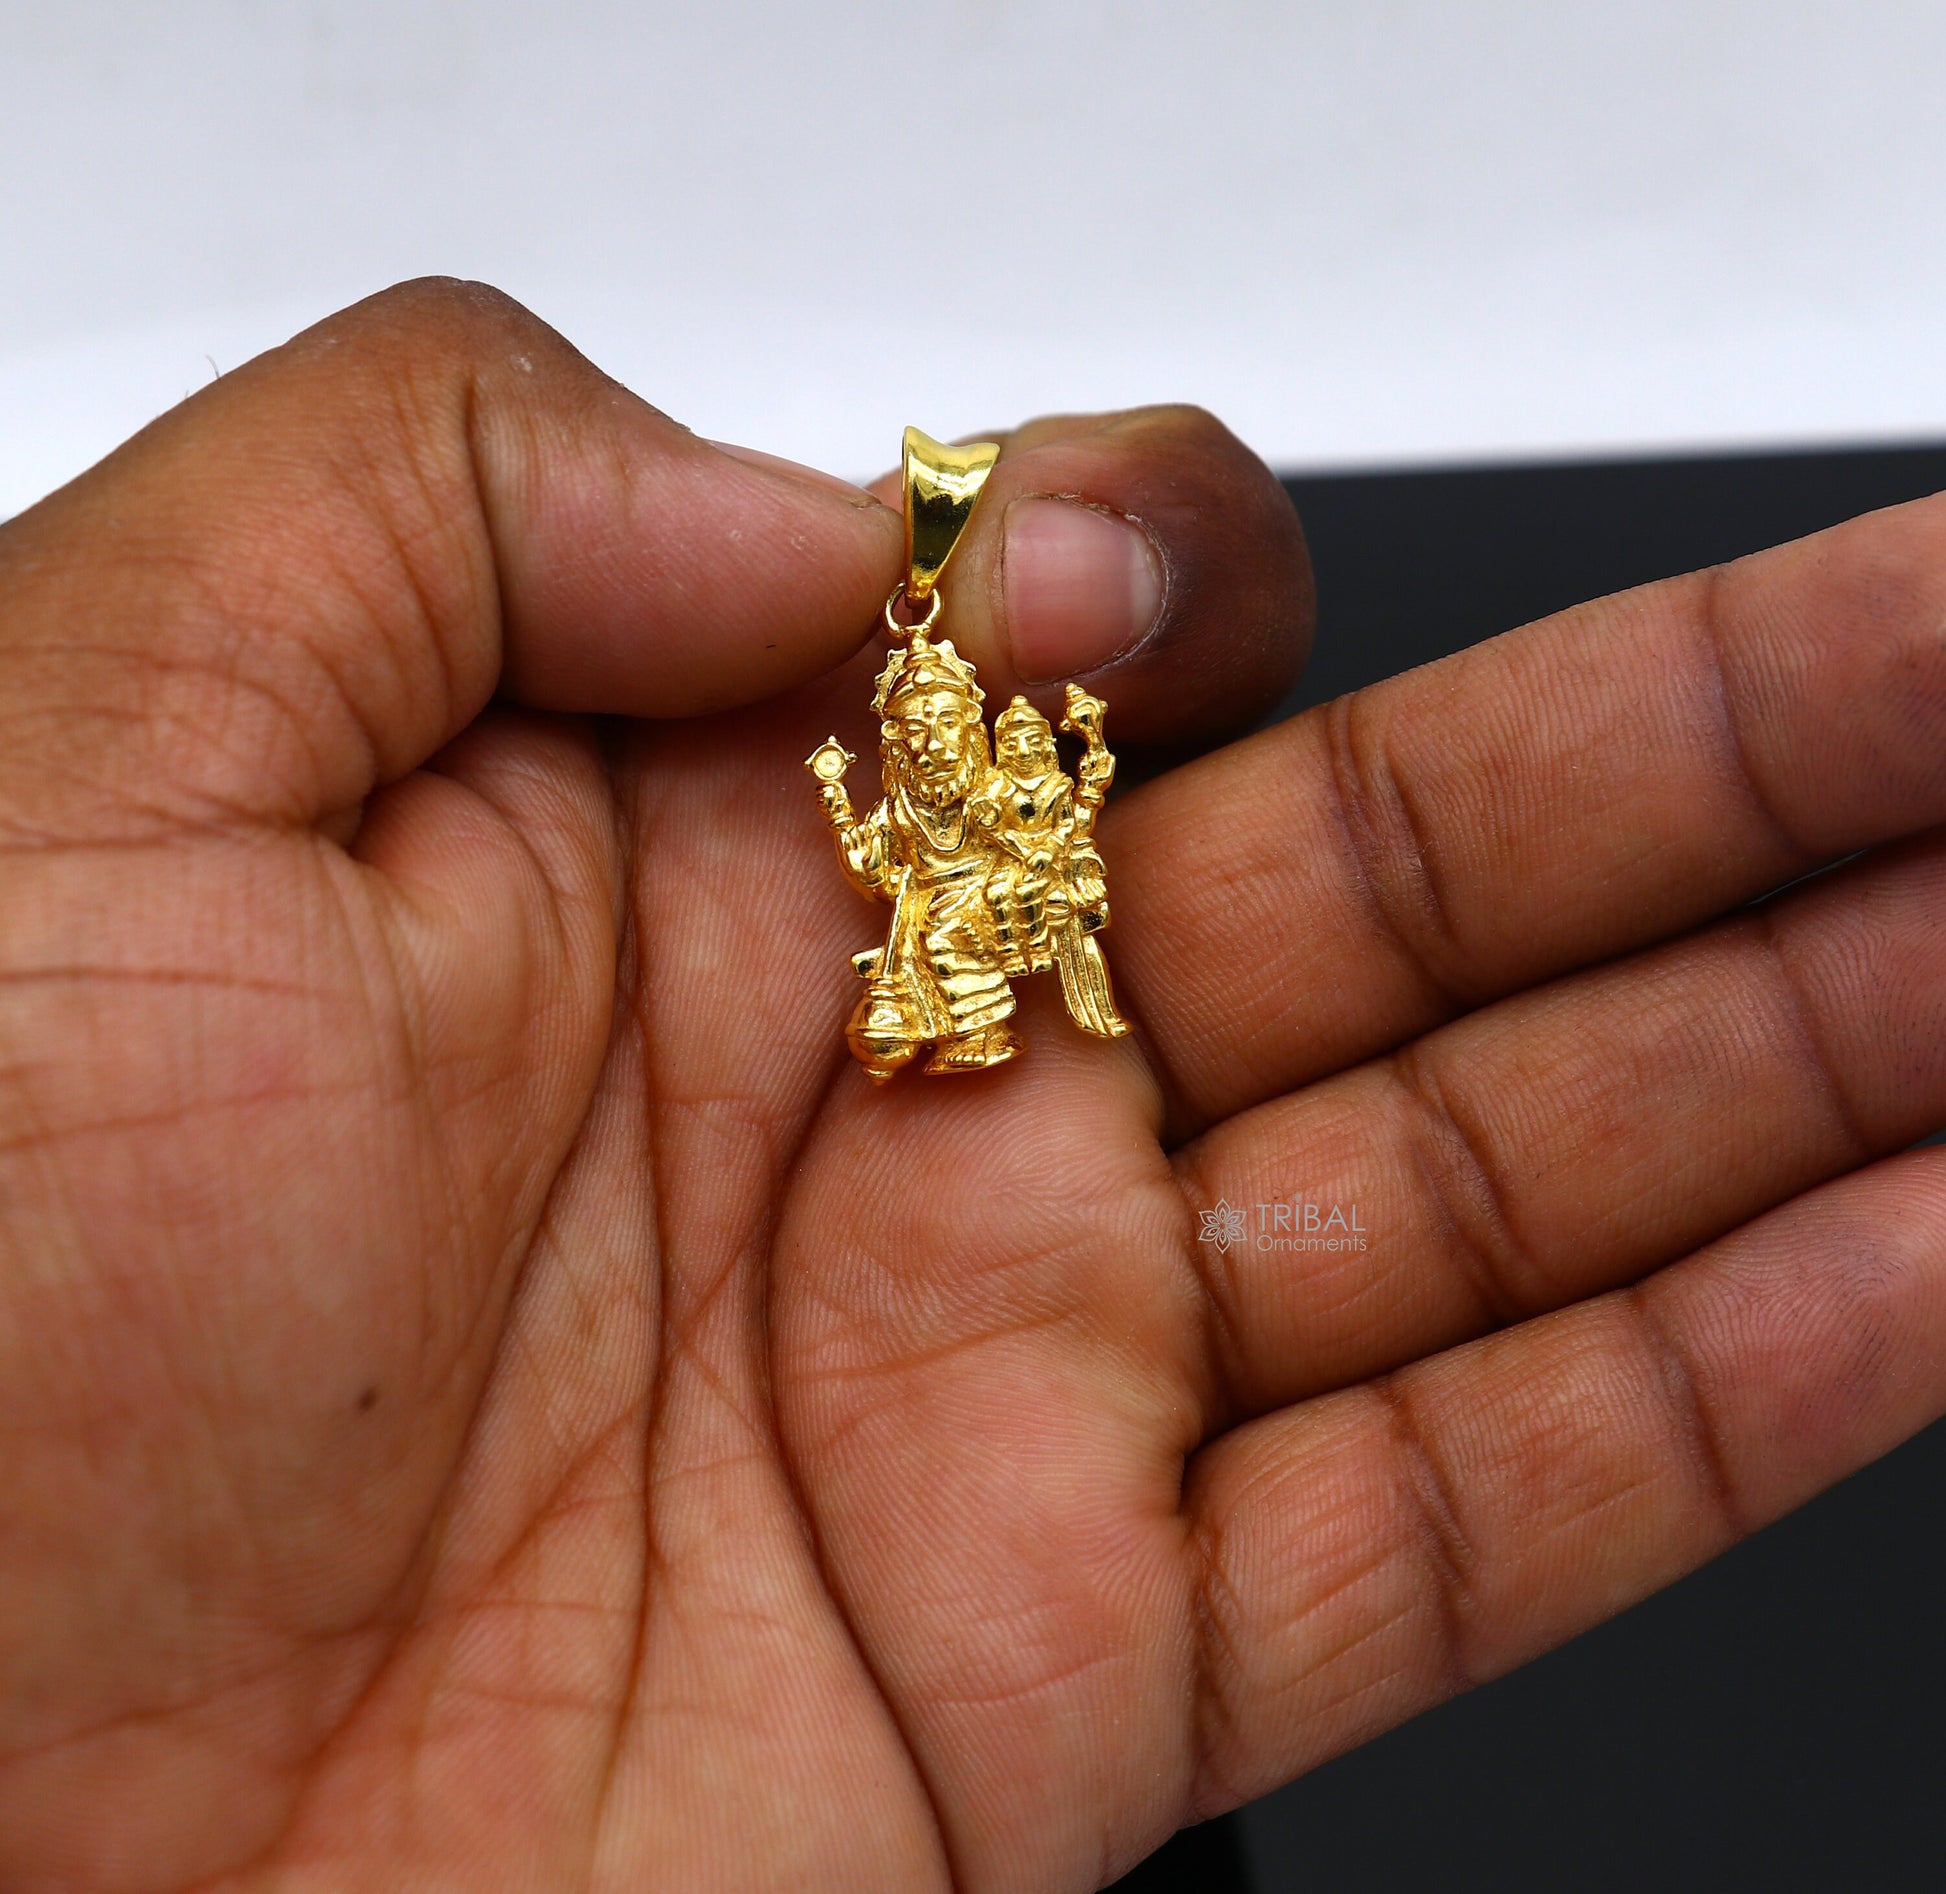 925 sterling silver handmade divine Vishnu with Laxmi (narsimha)pendant, amazing stylish unisex pendant personalized jewelry nsp603 - TRIBAL ORNAMENTS